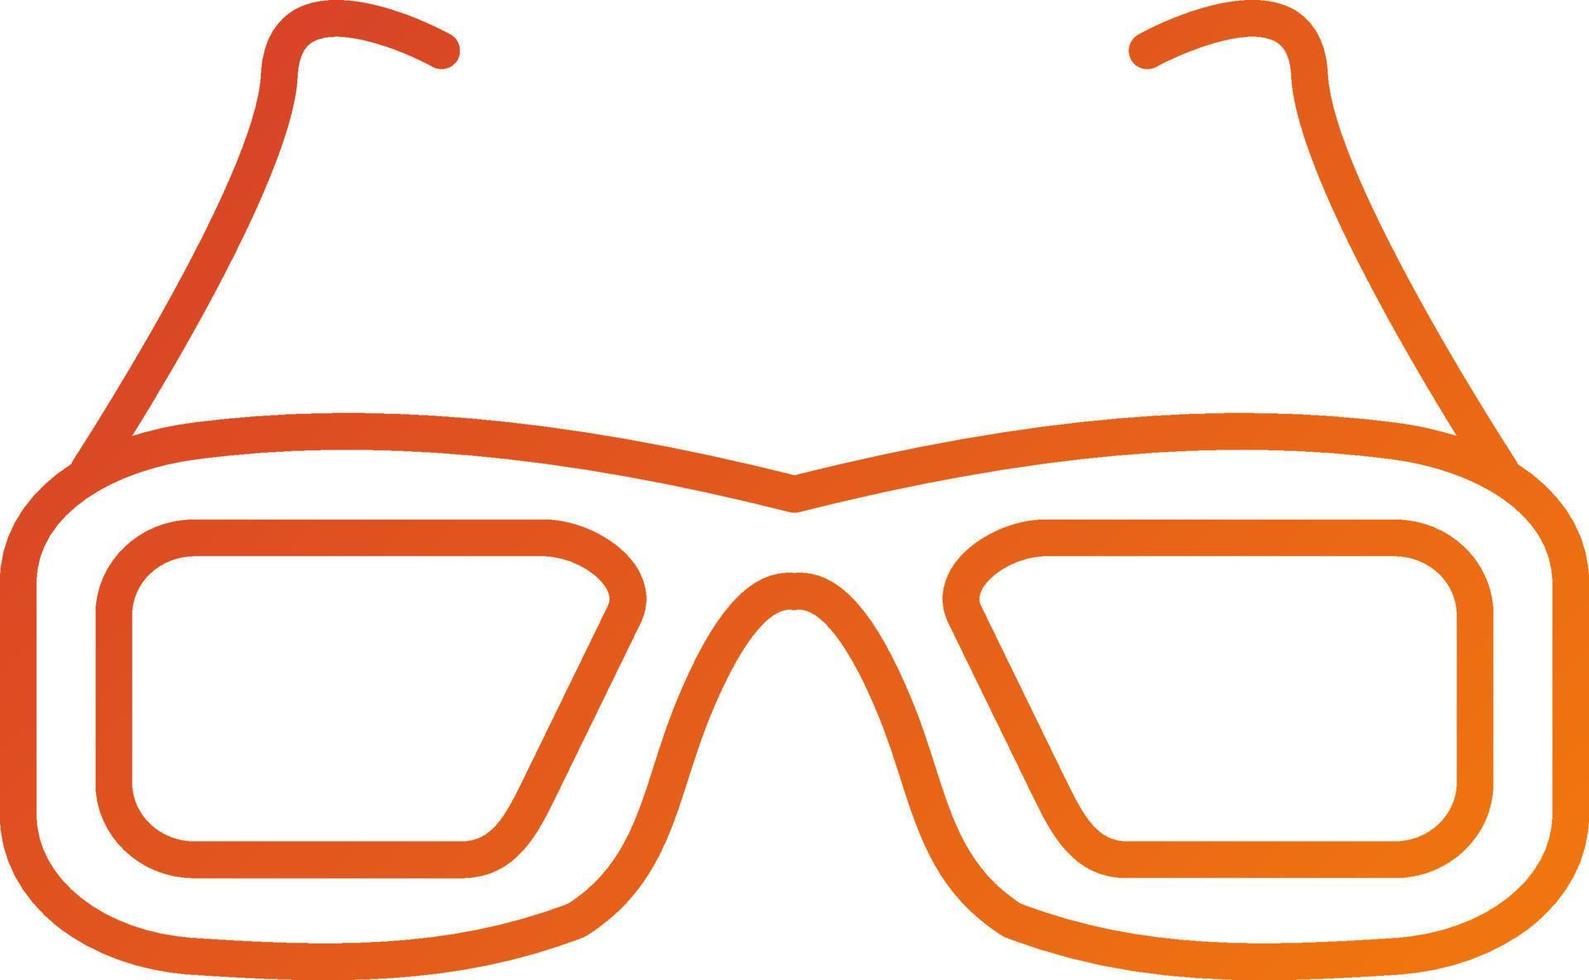 Sonnenbrillen-Icon-Stil vektor